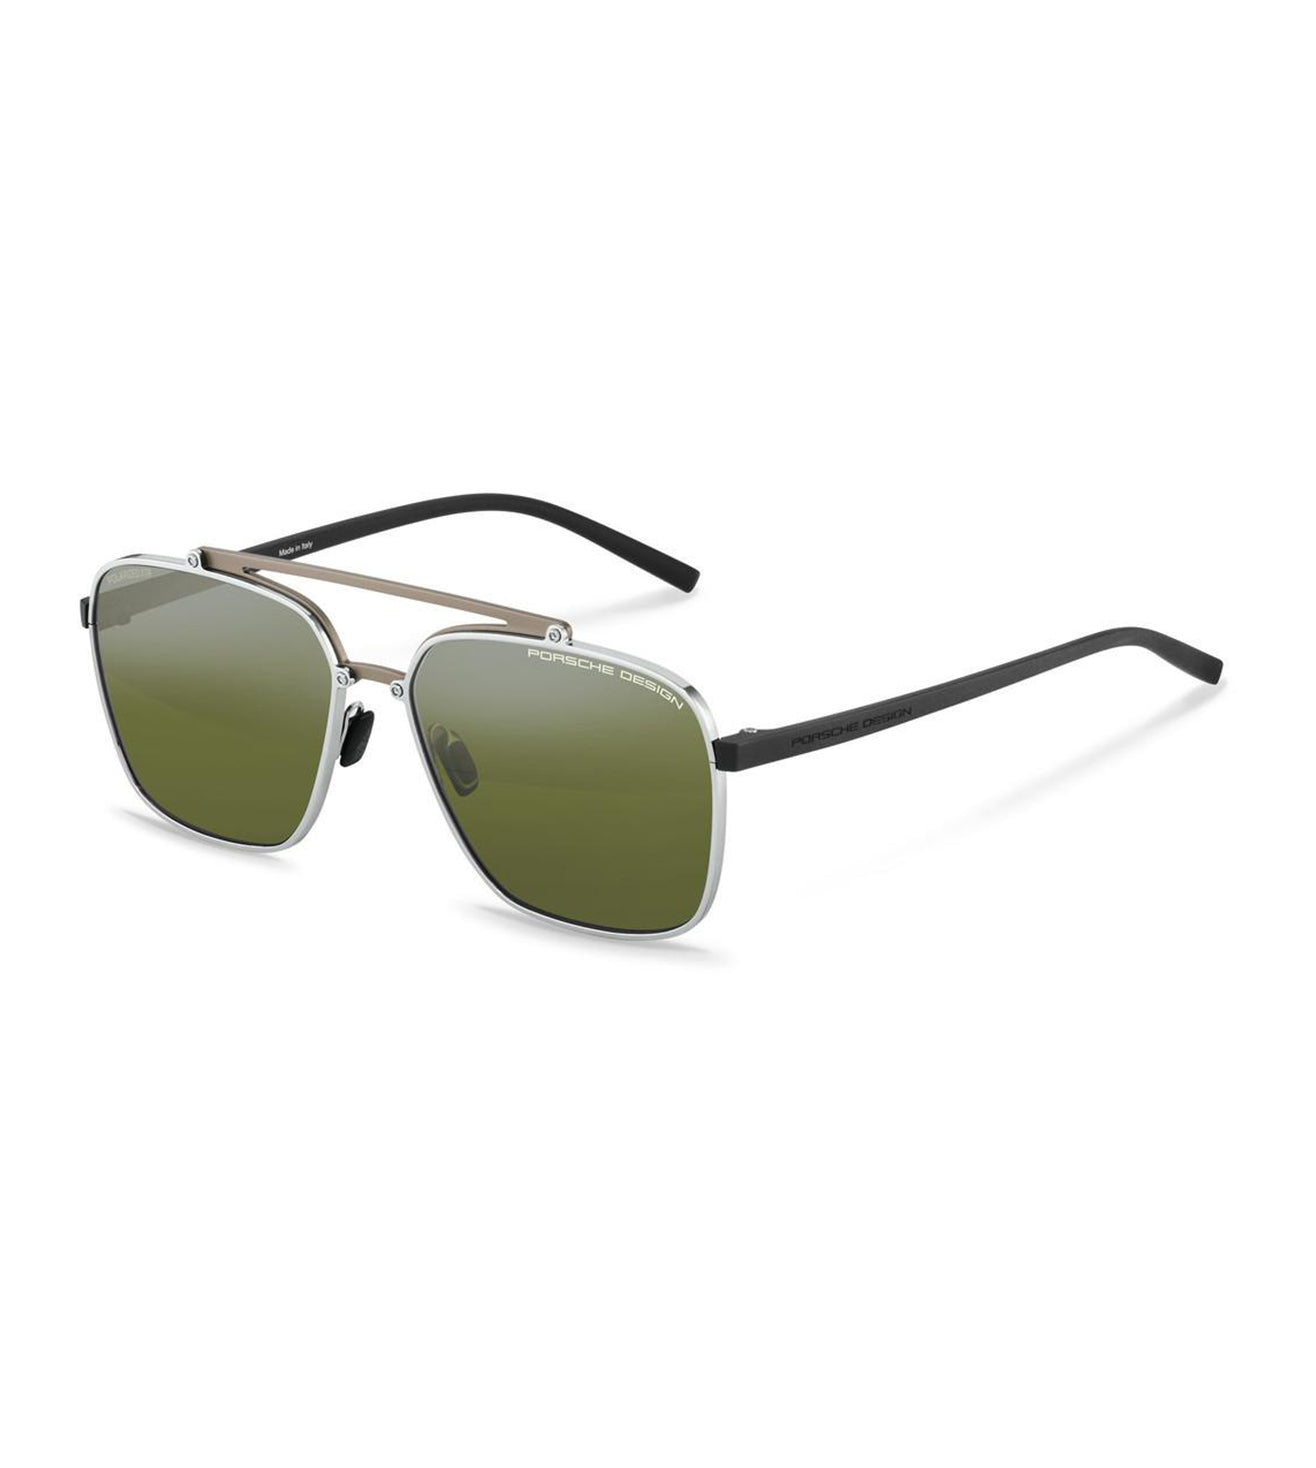 Porsche Design Men's Green Polarized Aviator Sunglasses